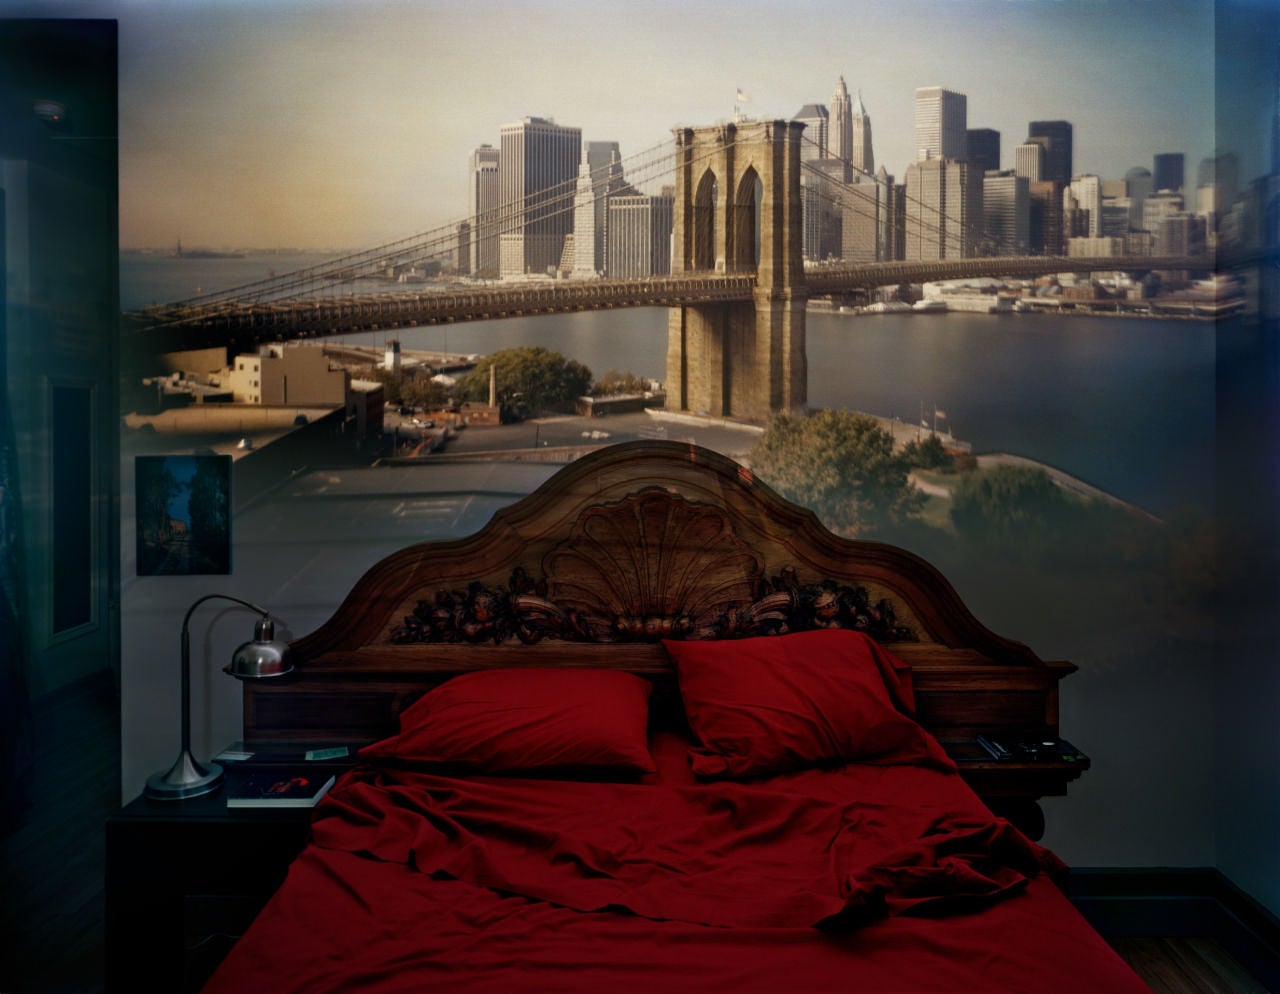 Abelardo Morell Color Photograph - Camera Obscura:View of the Brooklyn Bridge in Bedroom, 2009